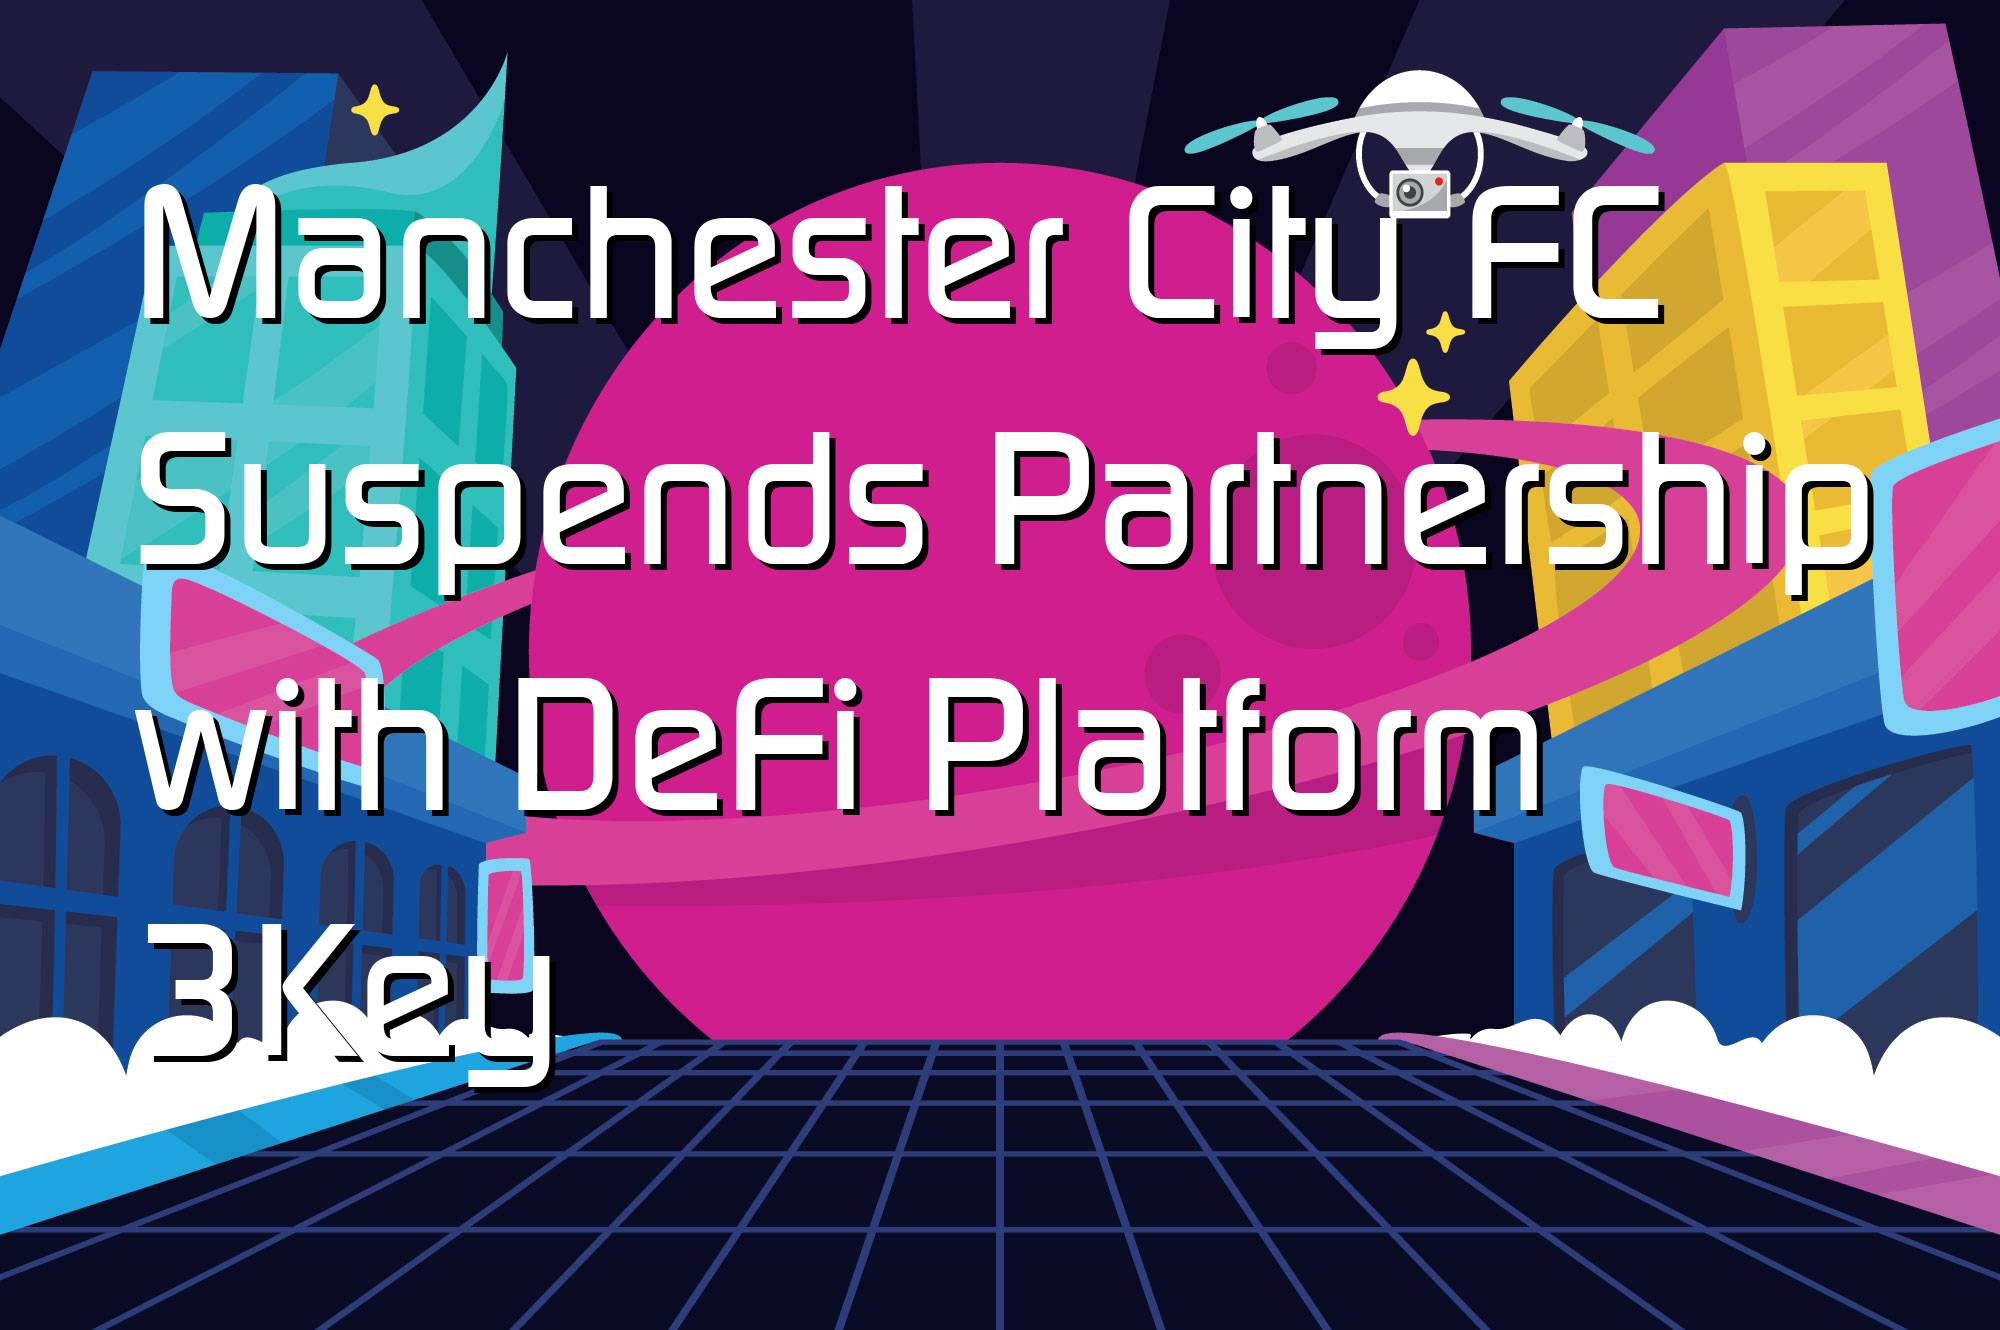 @$56557: Manchester City FC Suspends Partnership with DeFi Platform 3Key